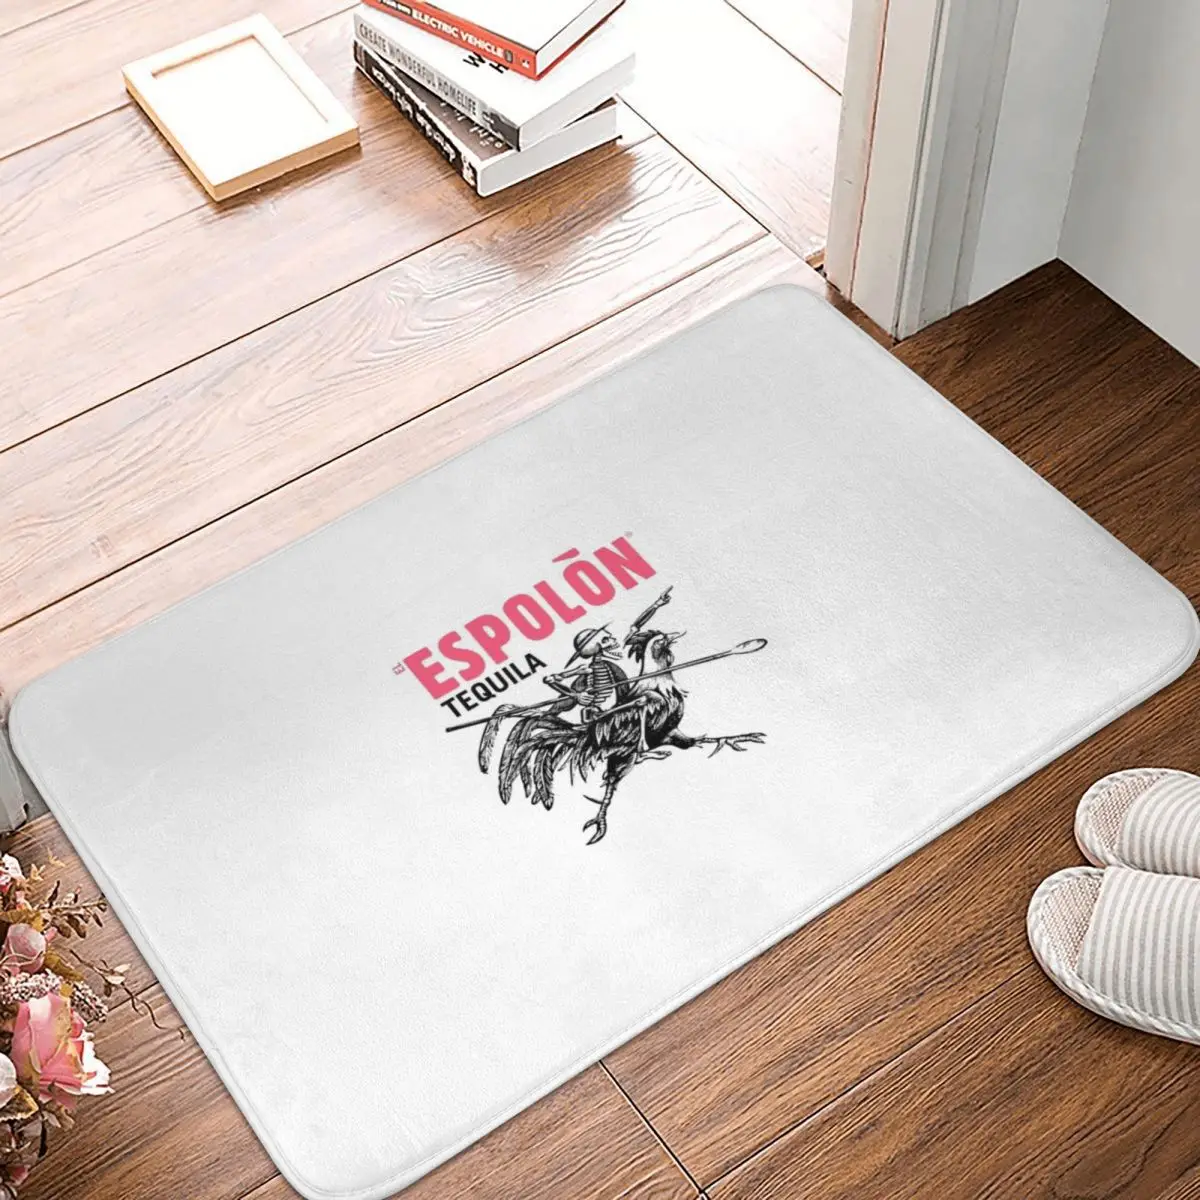 Best Selling Tequila Doormat Carpet Mat Rug Polyester PVC Non-Slip Floor Decor Bath Bathroom Kitchen Living Room 40x60